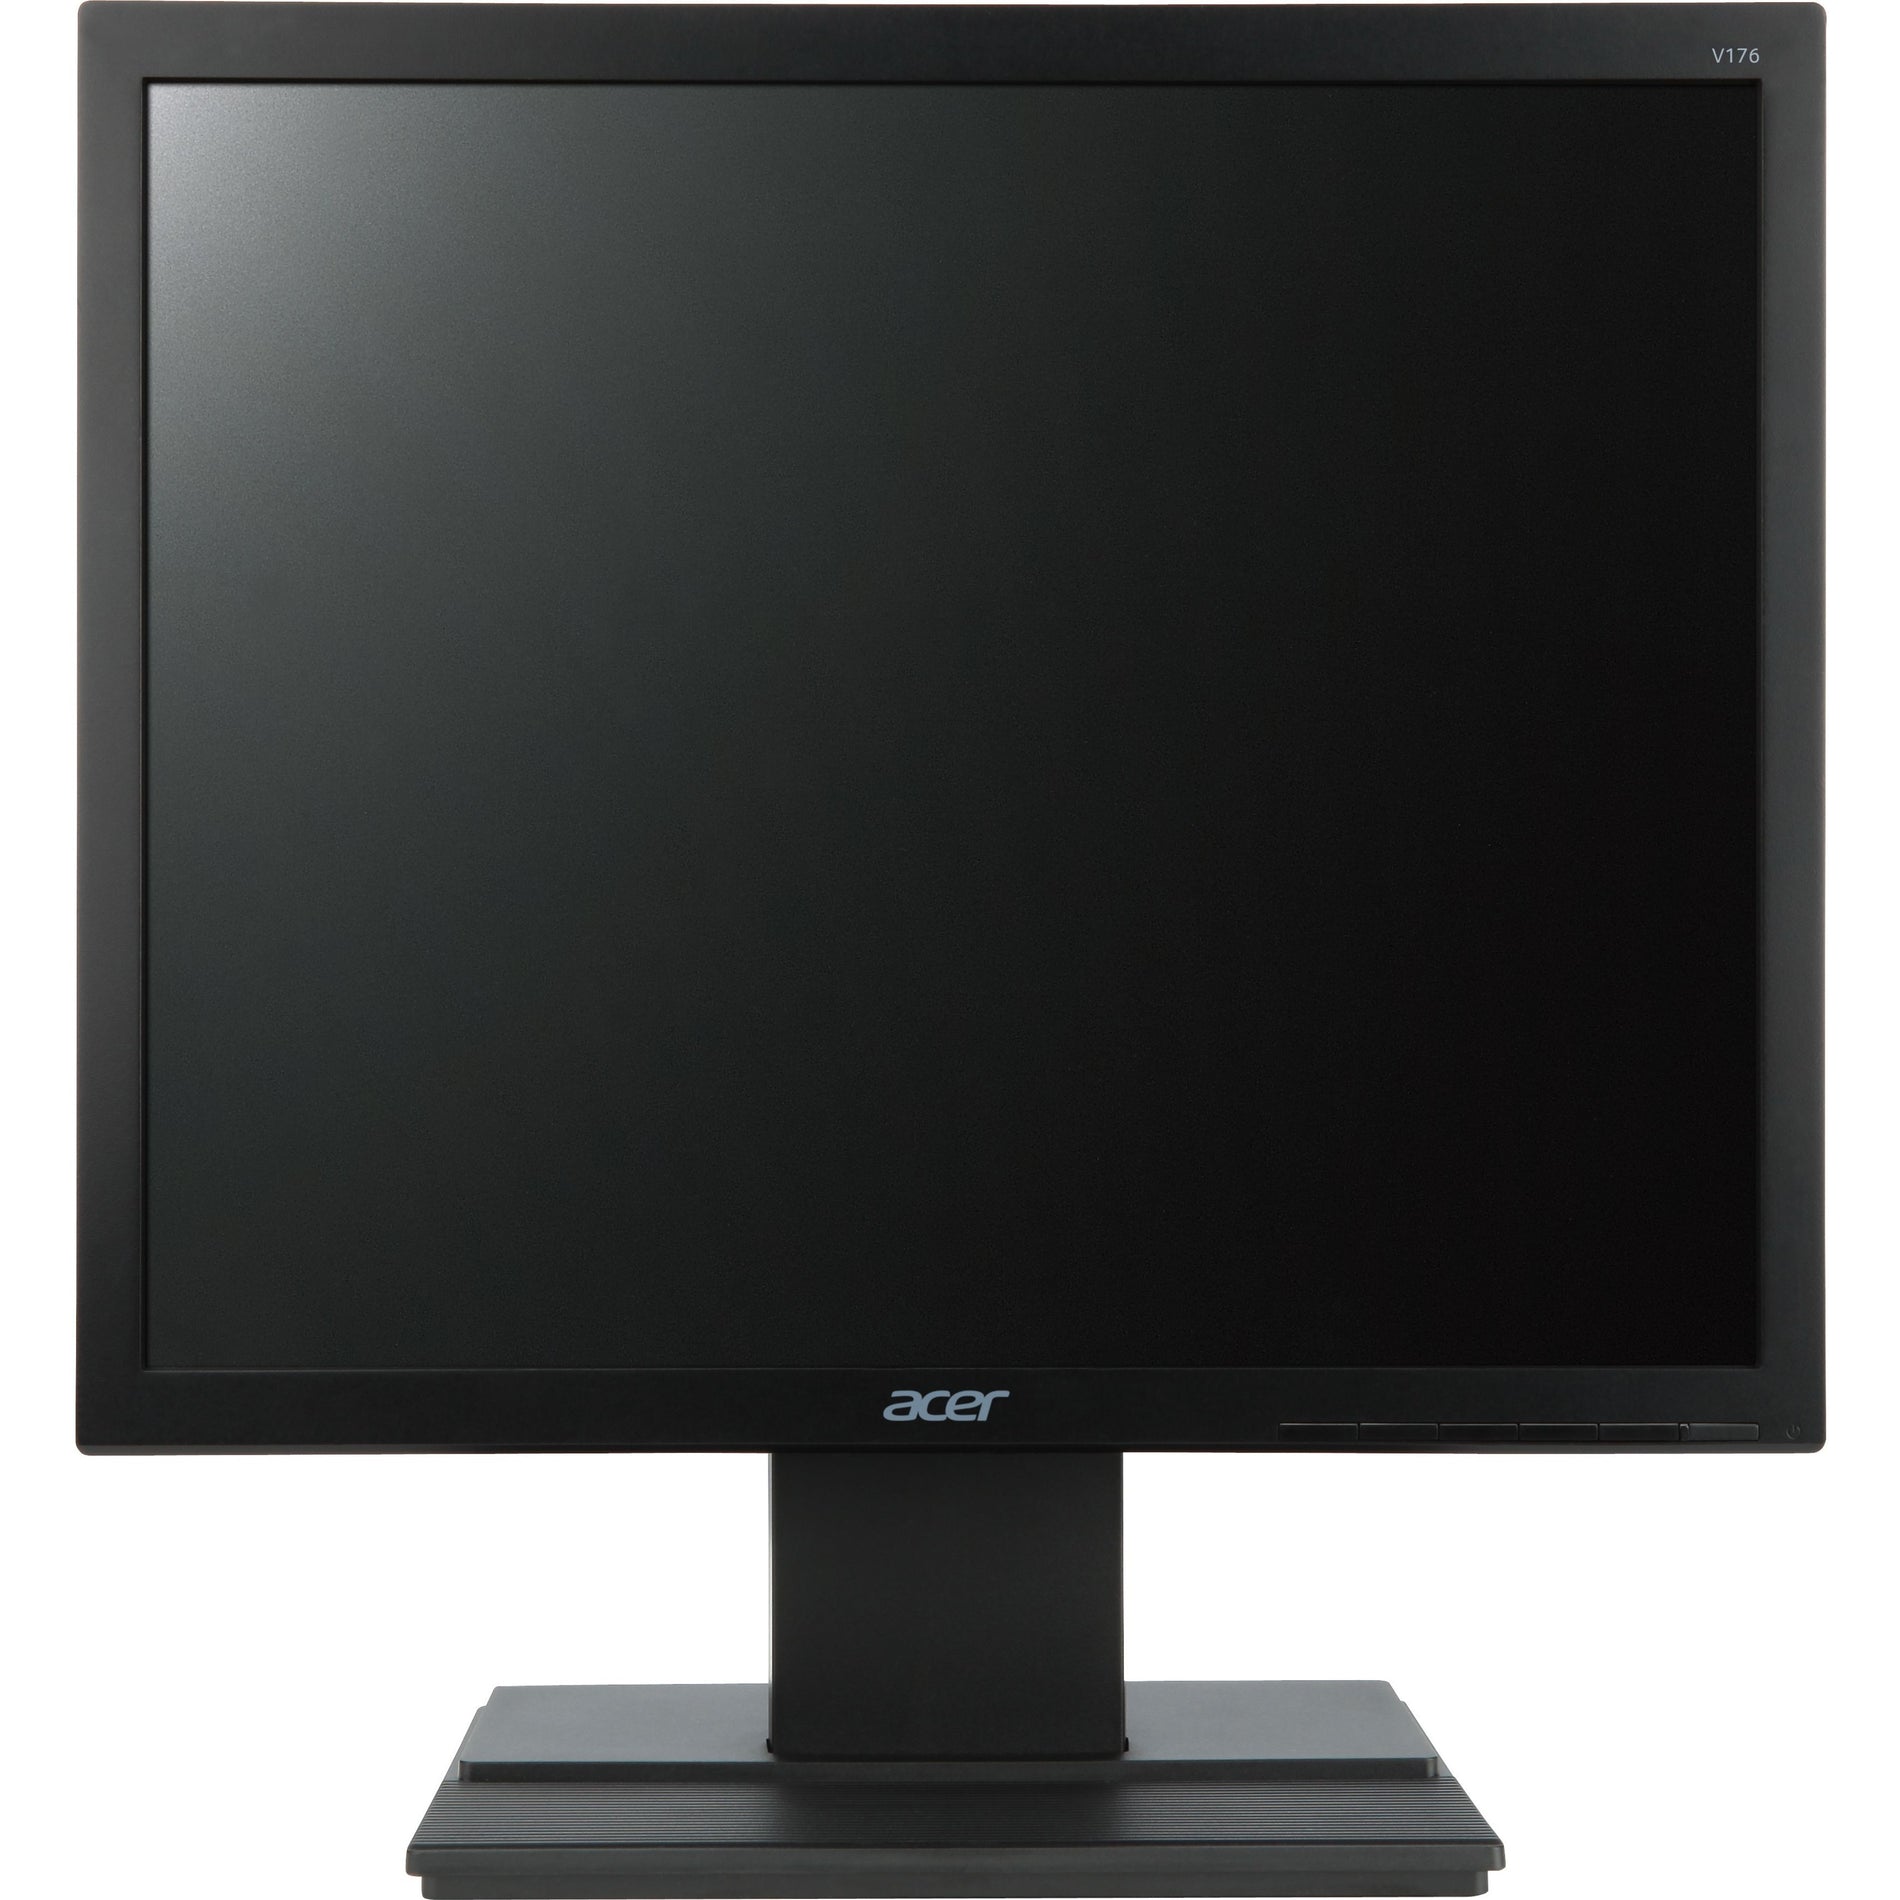 Acer UM.BV6AA.001 V176L LCD Monitor, 17" 5:4 5ms 100000000:1 Max(ACM) 250nits LED, VGA DVI (w/HDCP) US PA PA TCO6.0 Black